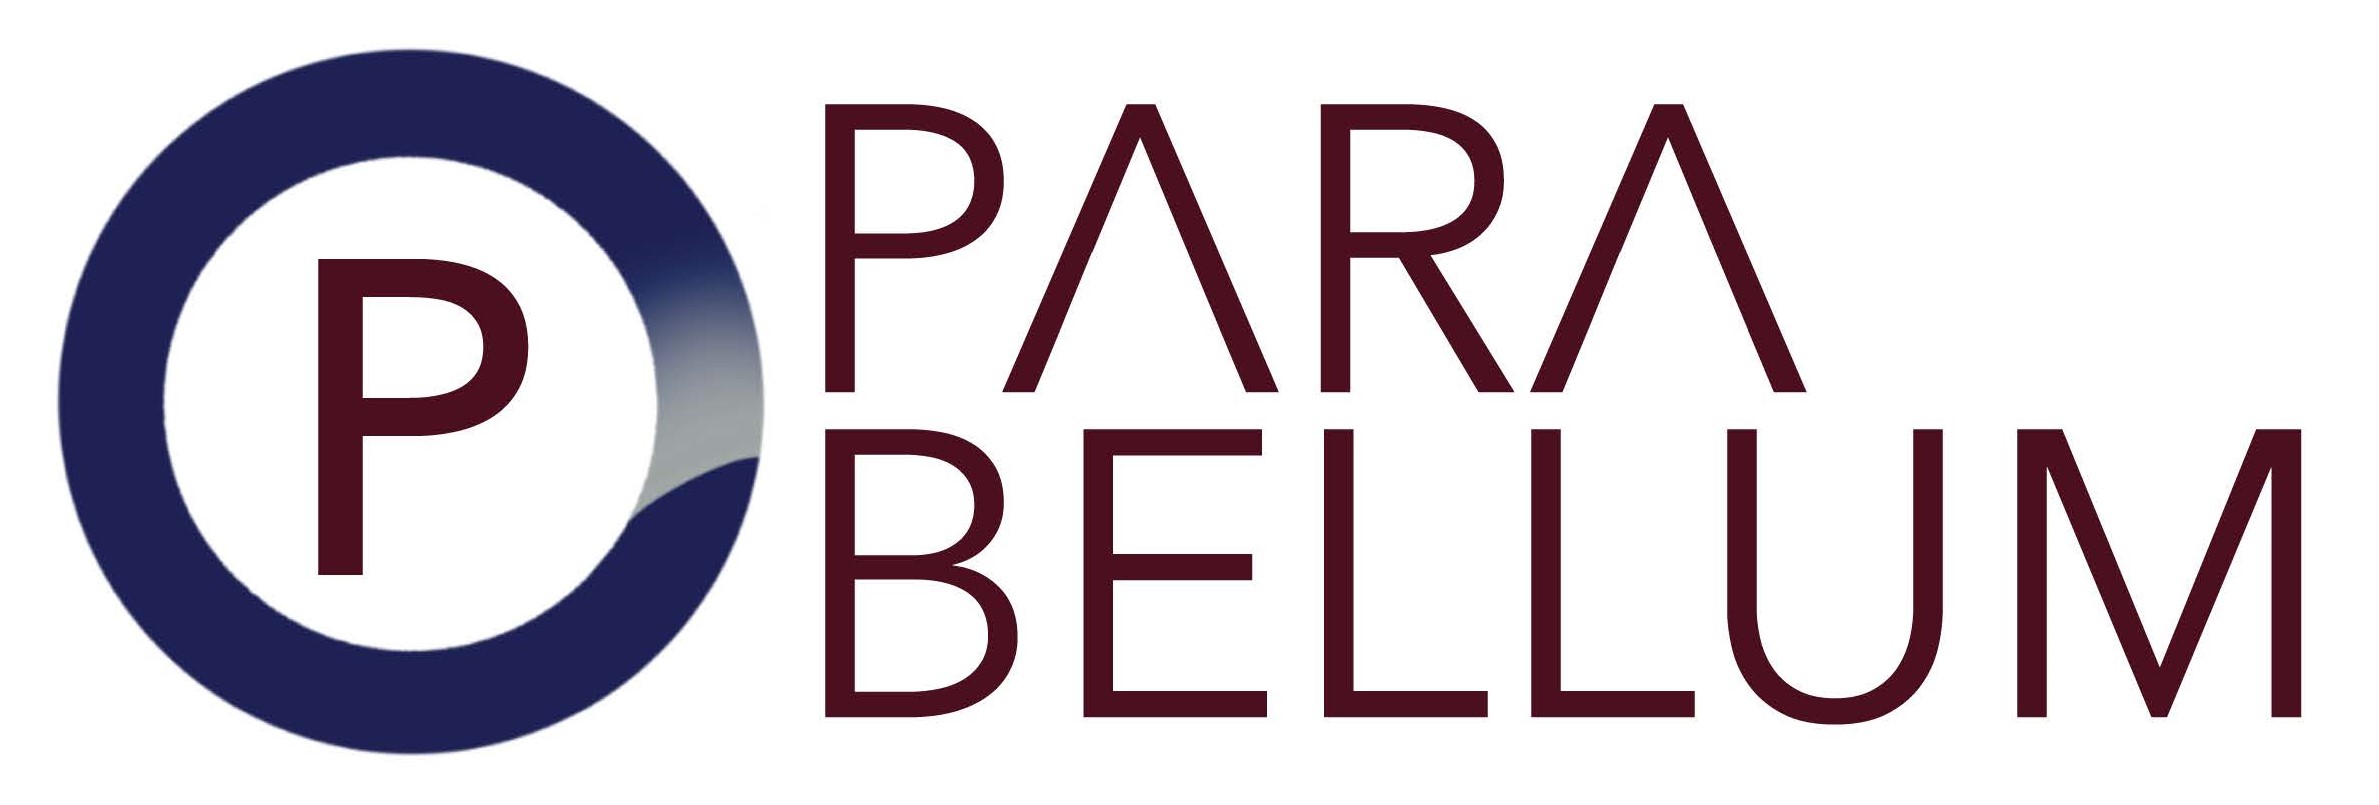 Parabellum_Logo 1.jpg